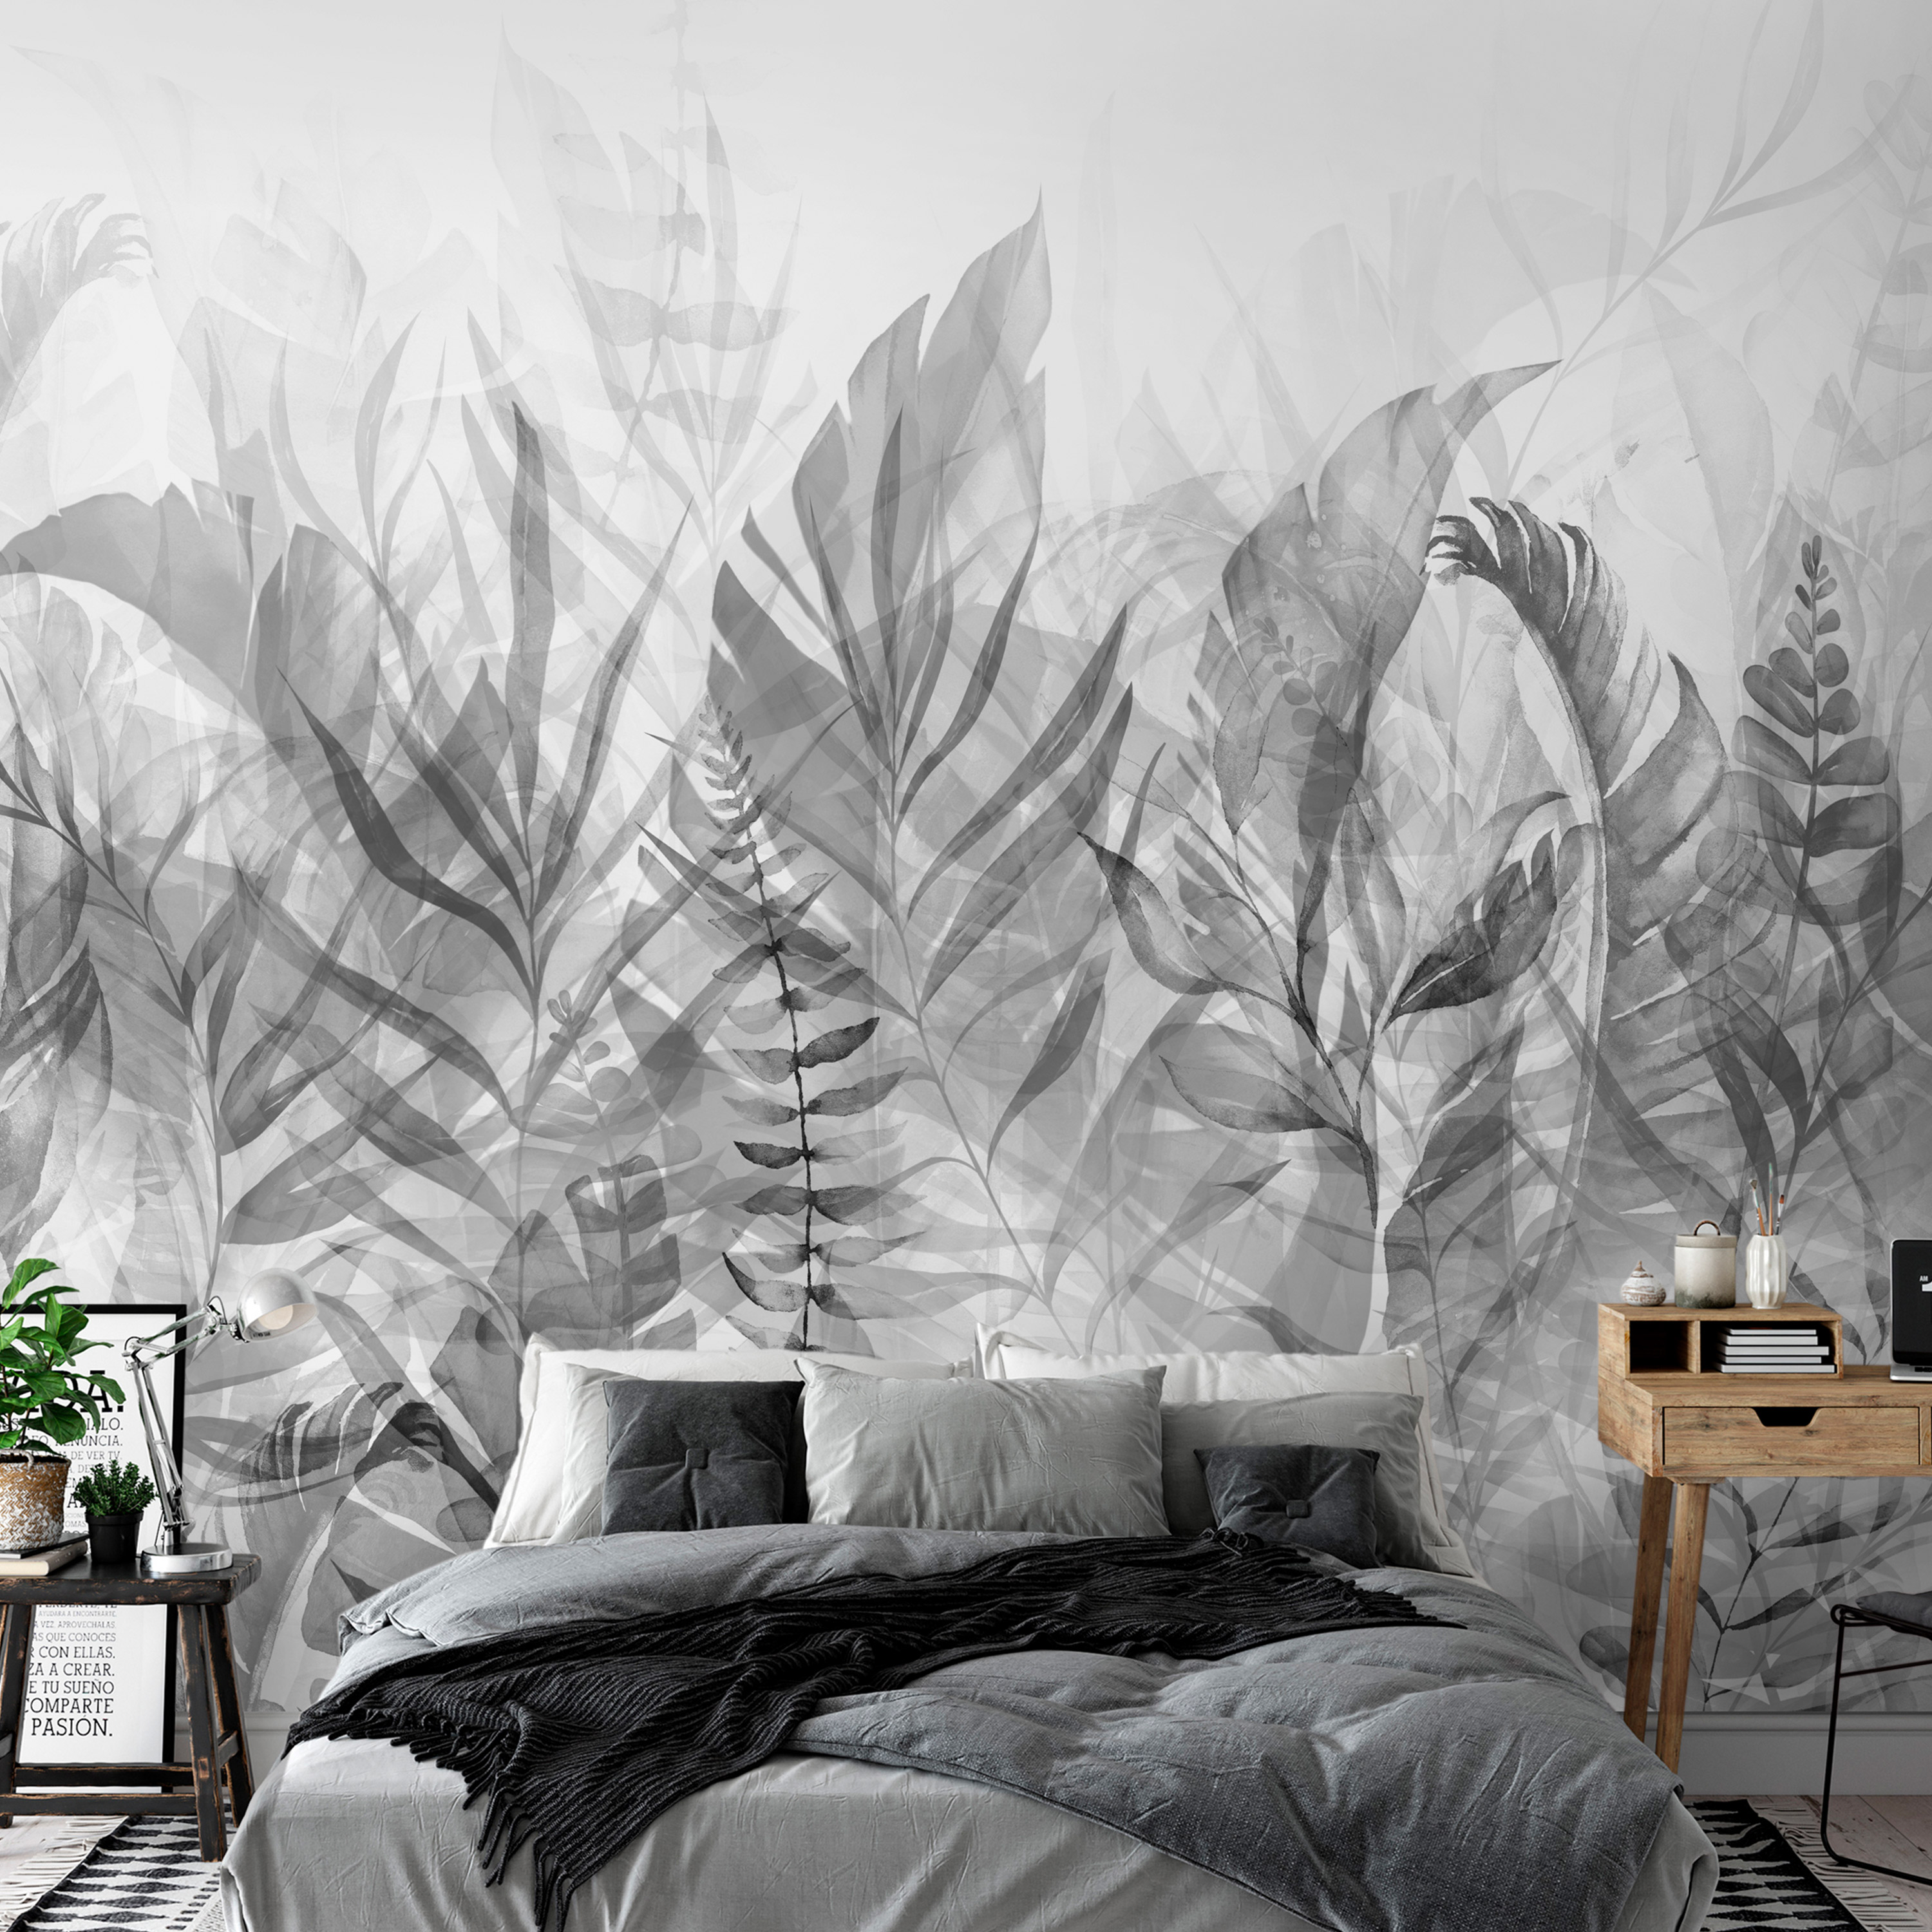 Self-adhesive Wallpaper - Magic Grove (Black and White) - 147x105